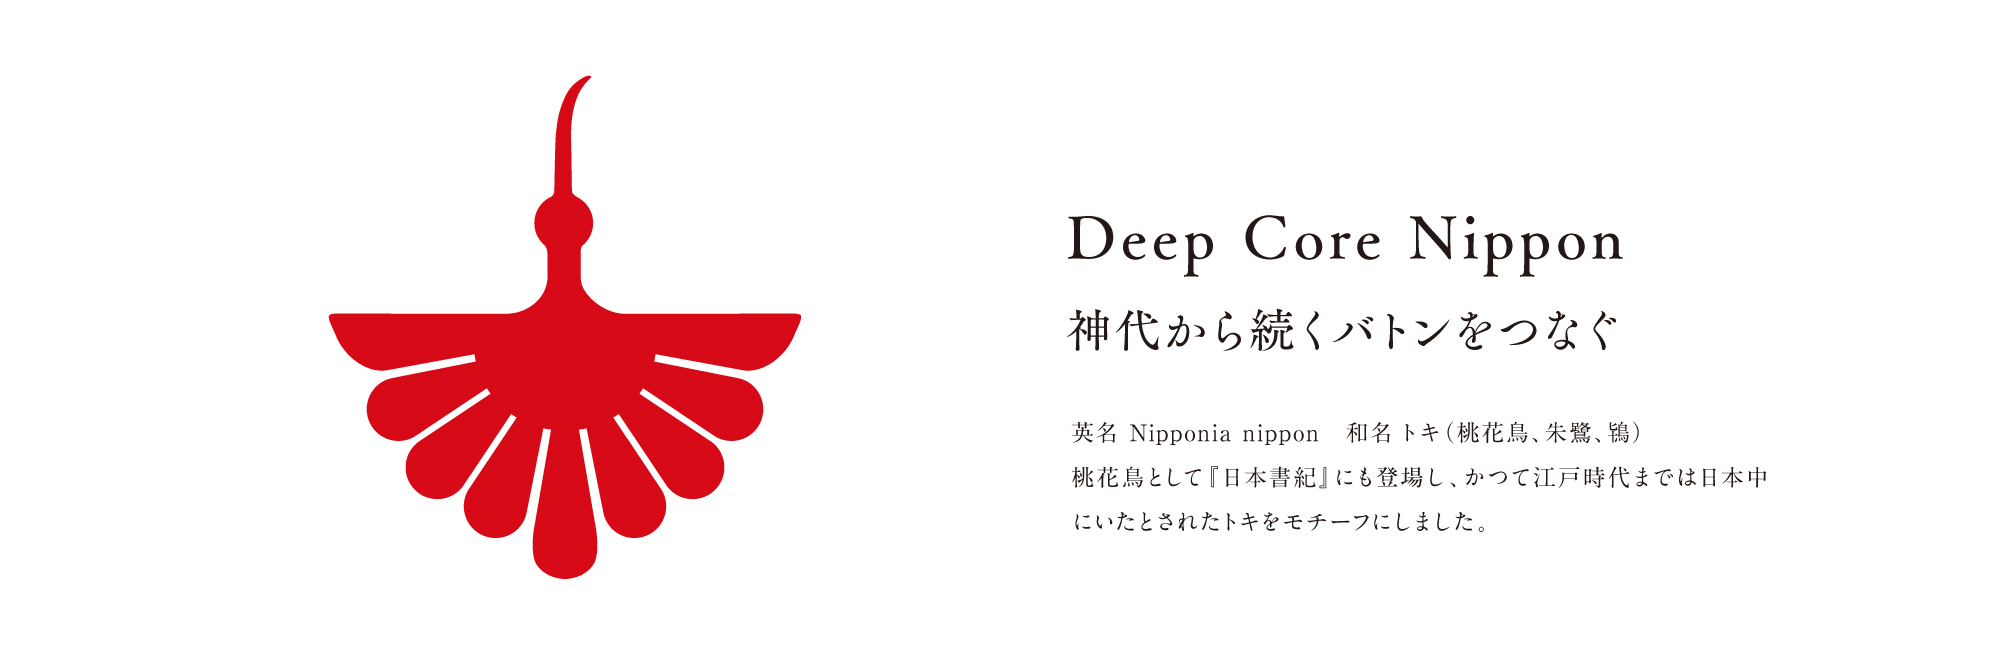 Deep Core Nippon